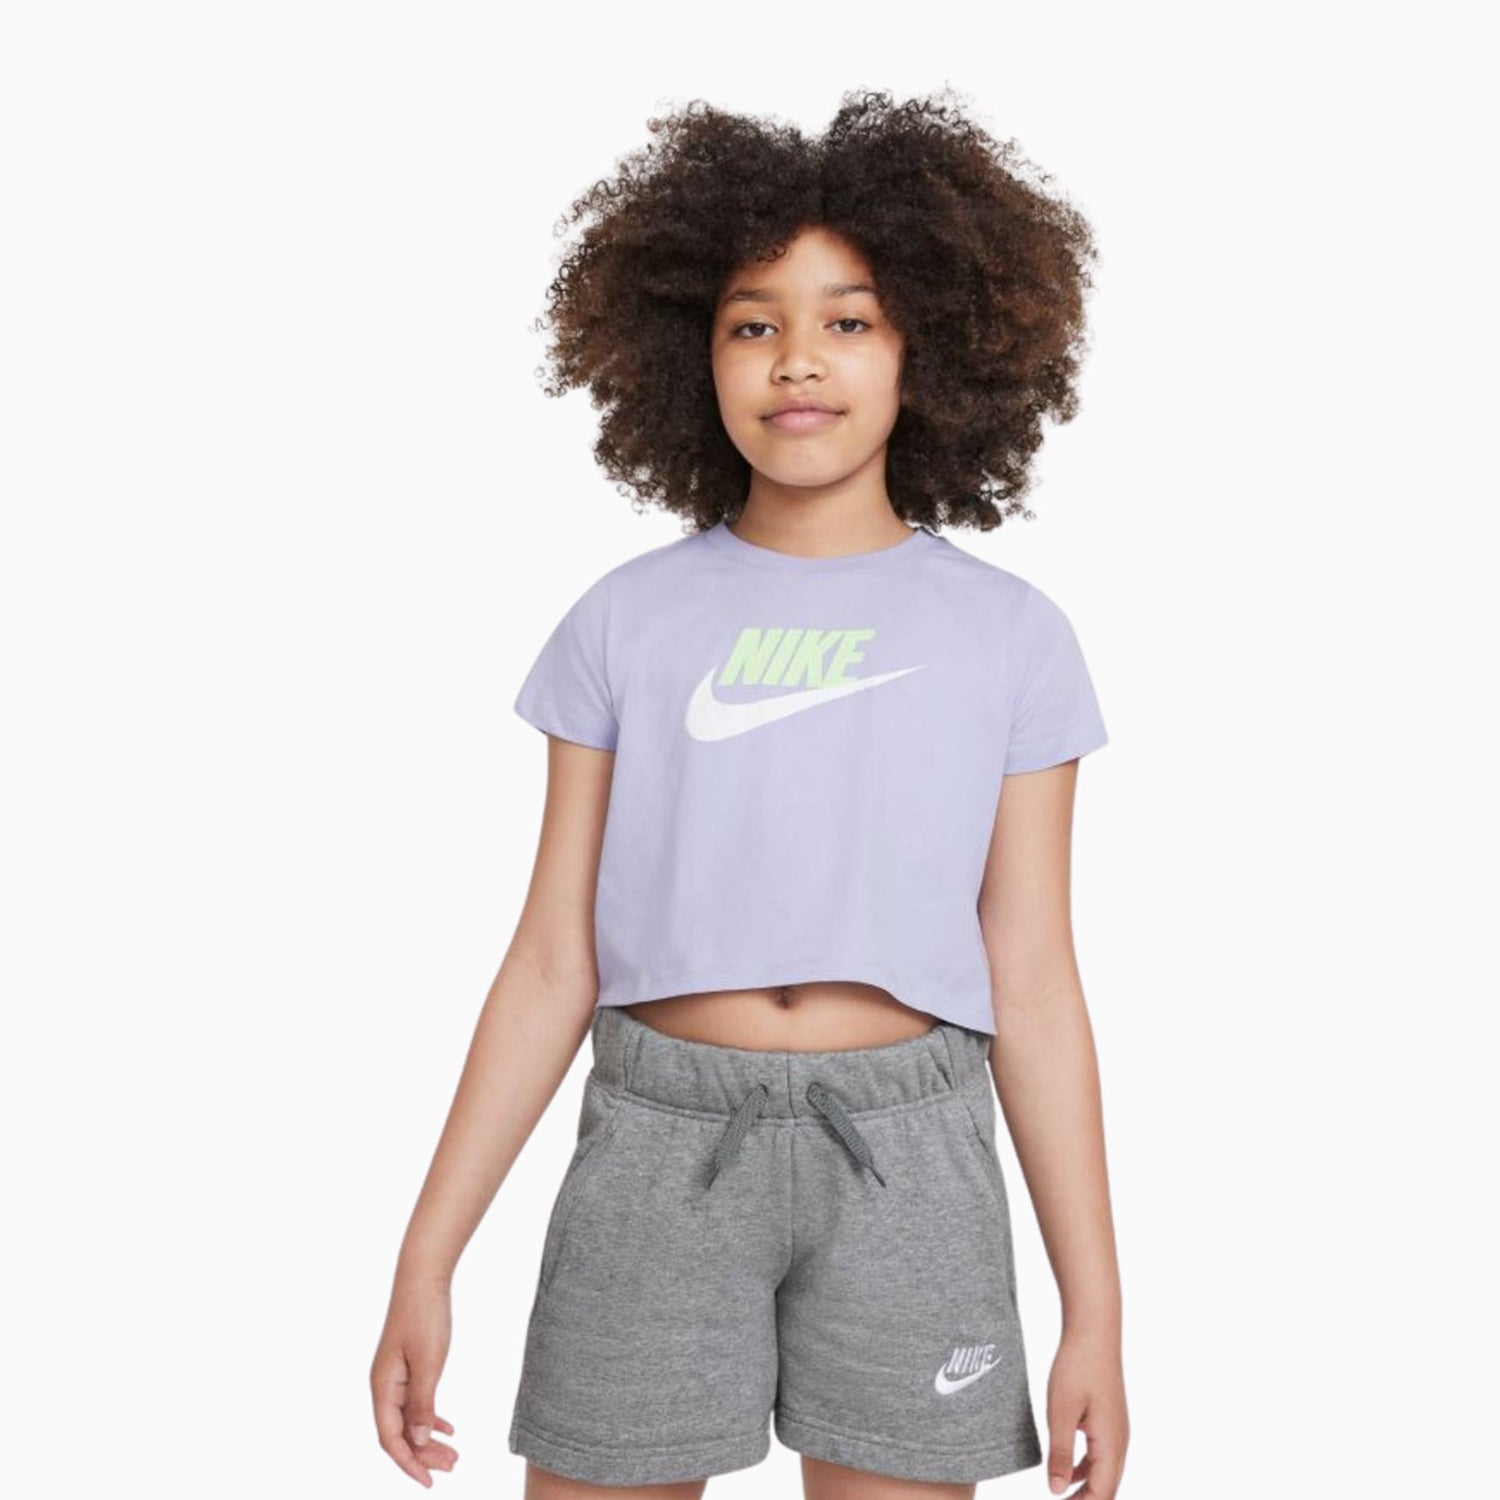 nike-kids-sportswear-cropped-t-shirt-da6925-563